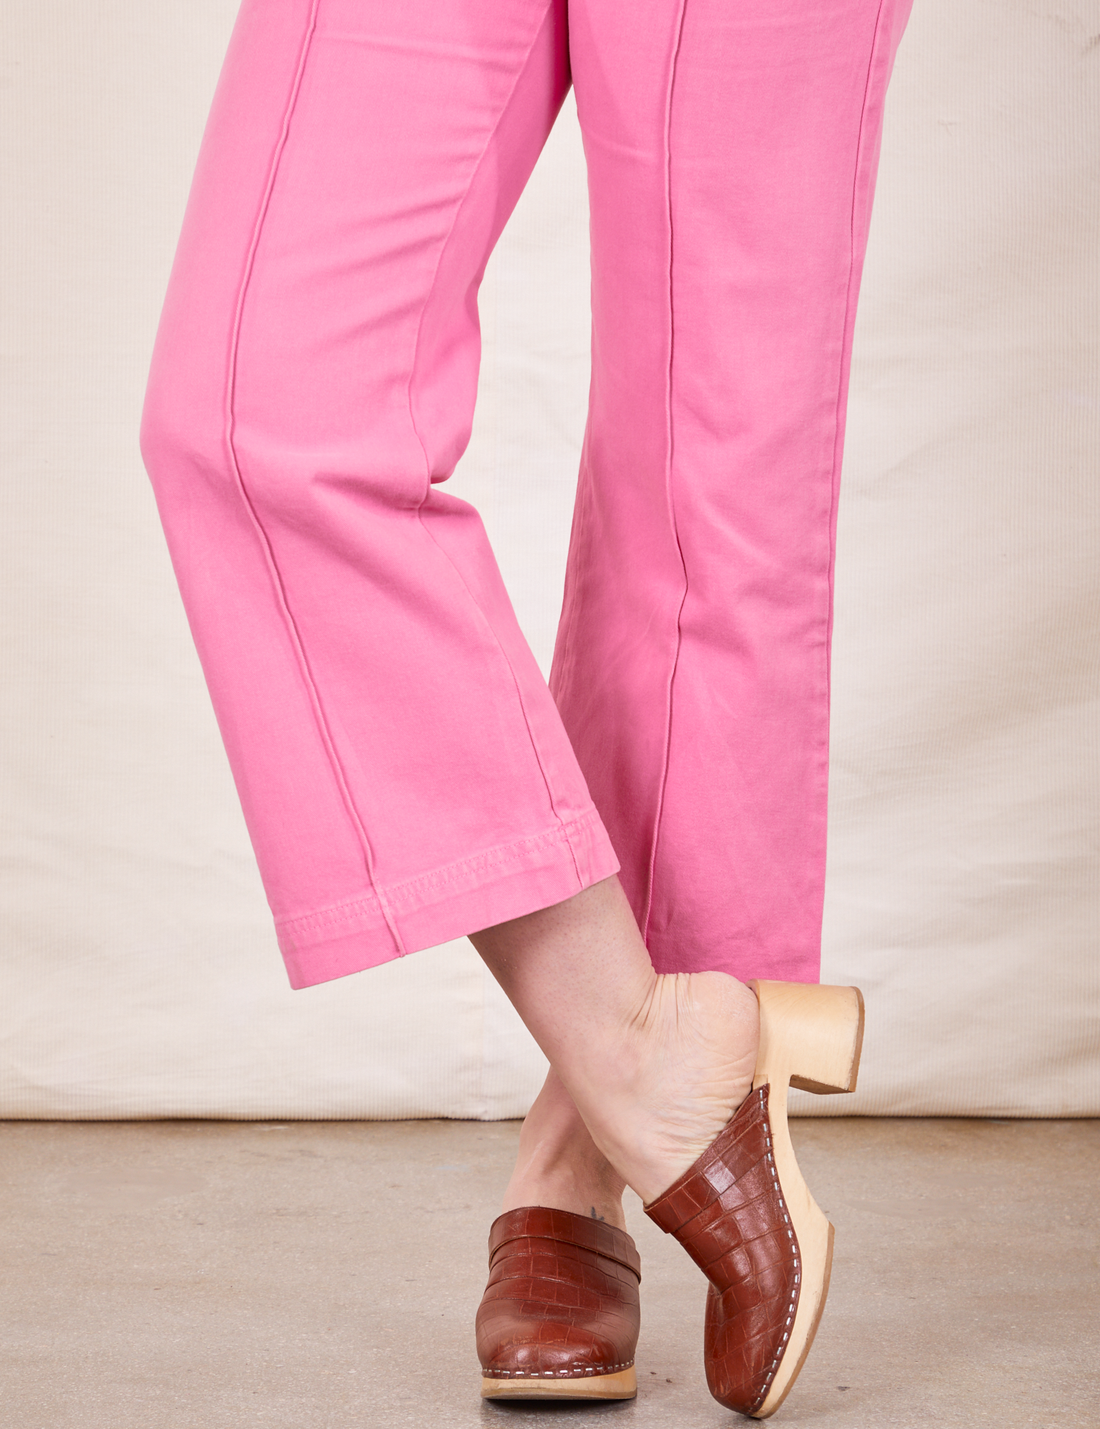 Western Pants in Bubblegum Pink pant leg close up on Allison